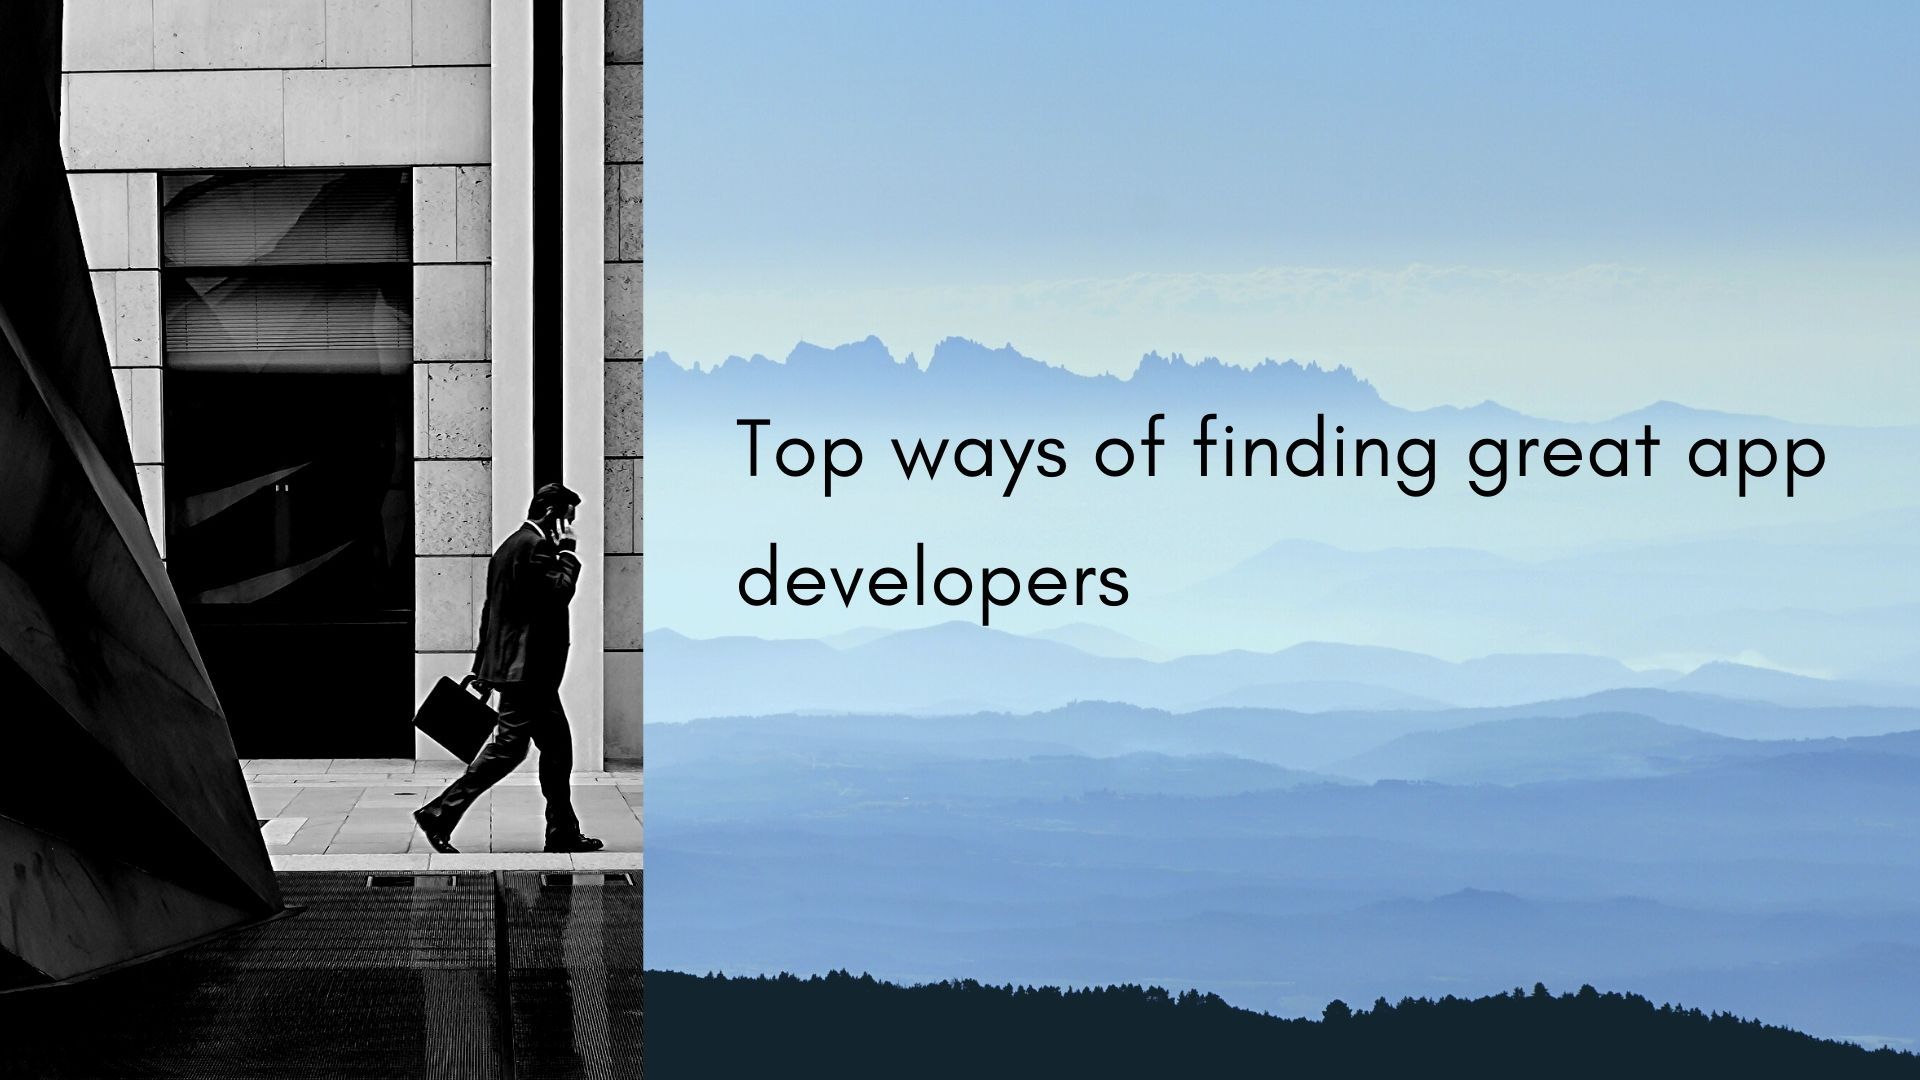 Top ways of finding great app developers